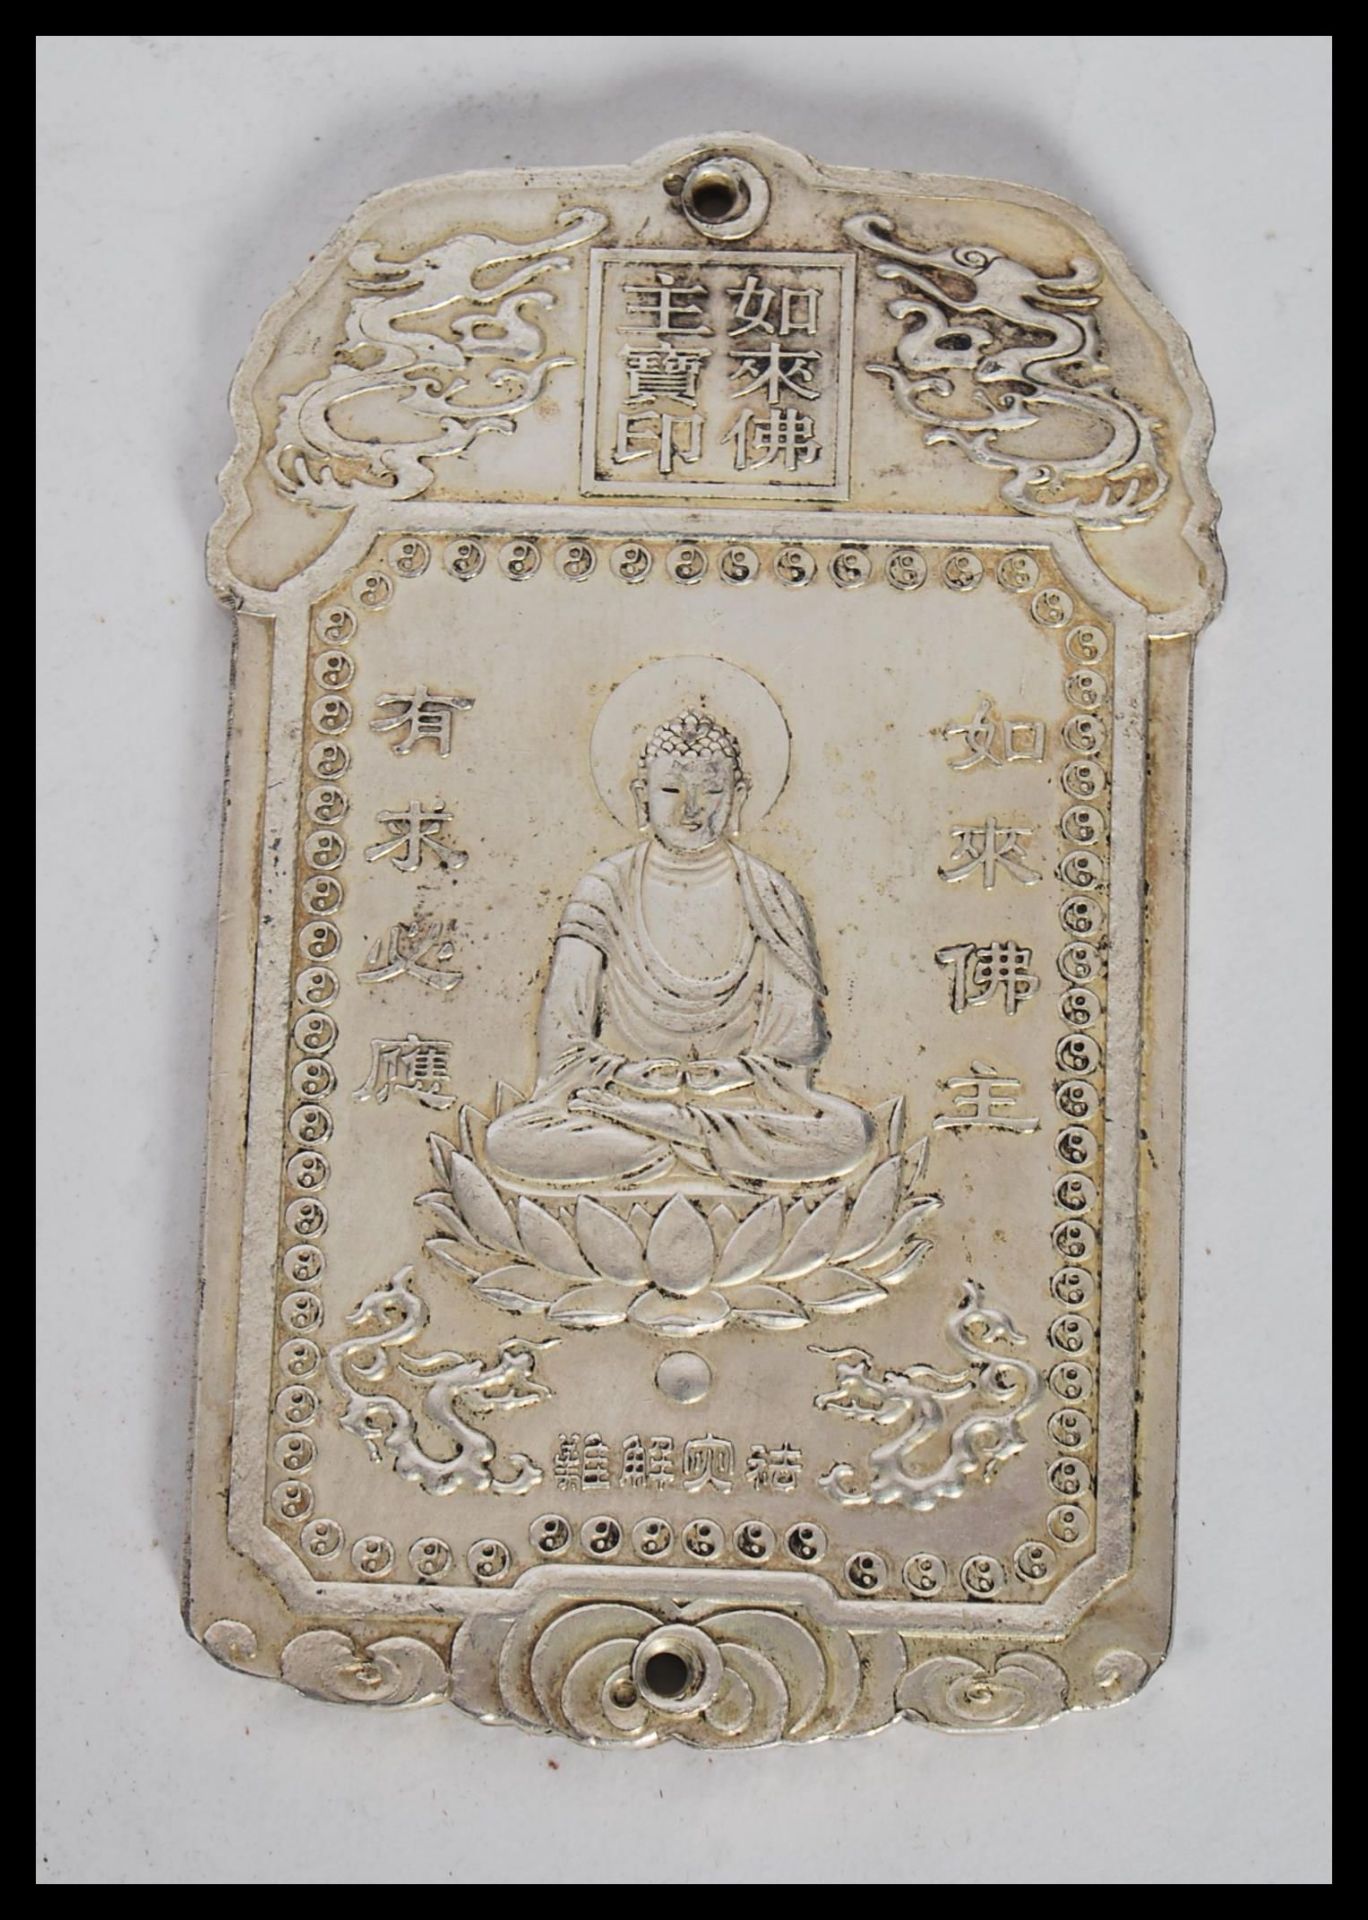 A 20th Century Chinese silver white metal ingot panel pendant of shaped rectangular form depicting